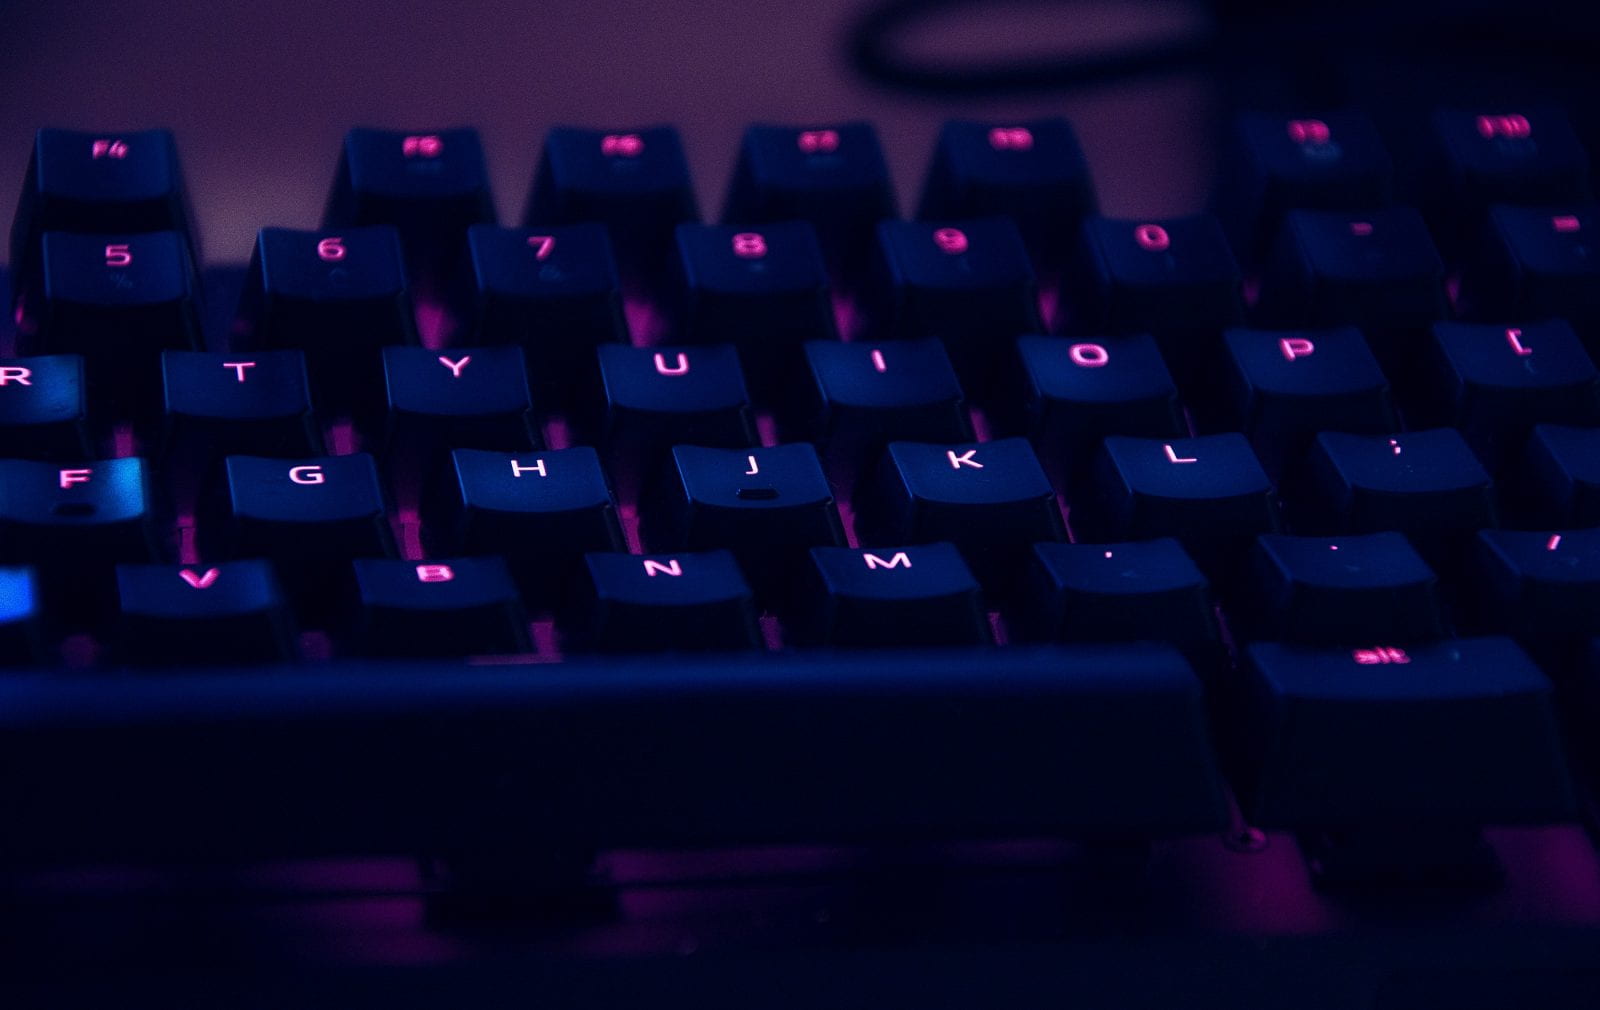 close up shot of an illuminated keyboard